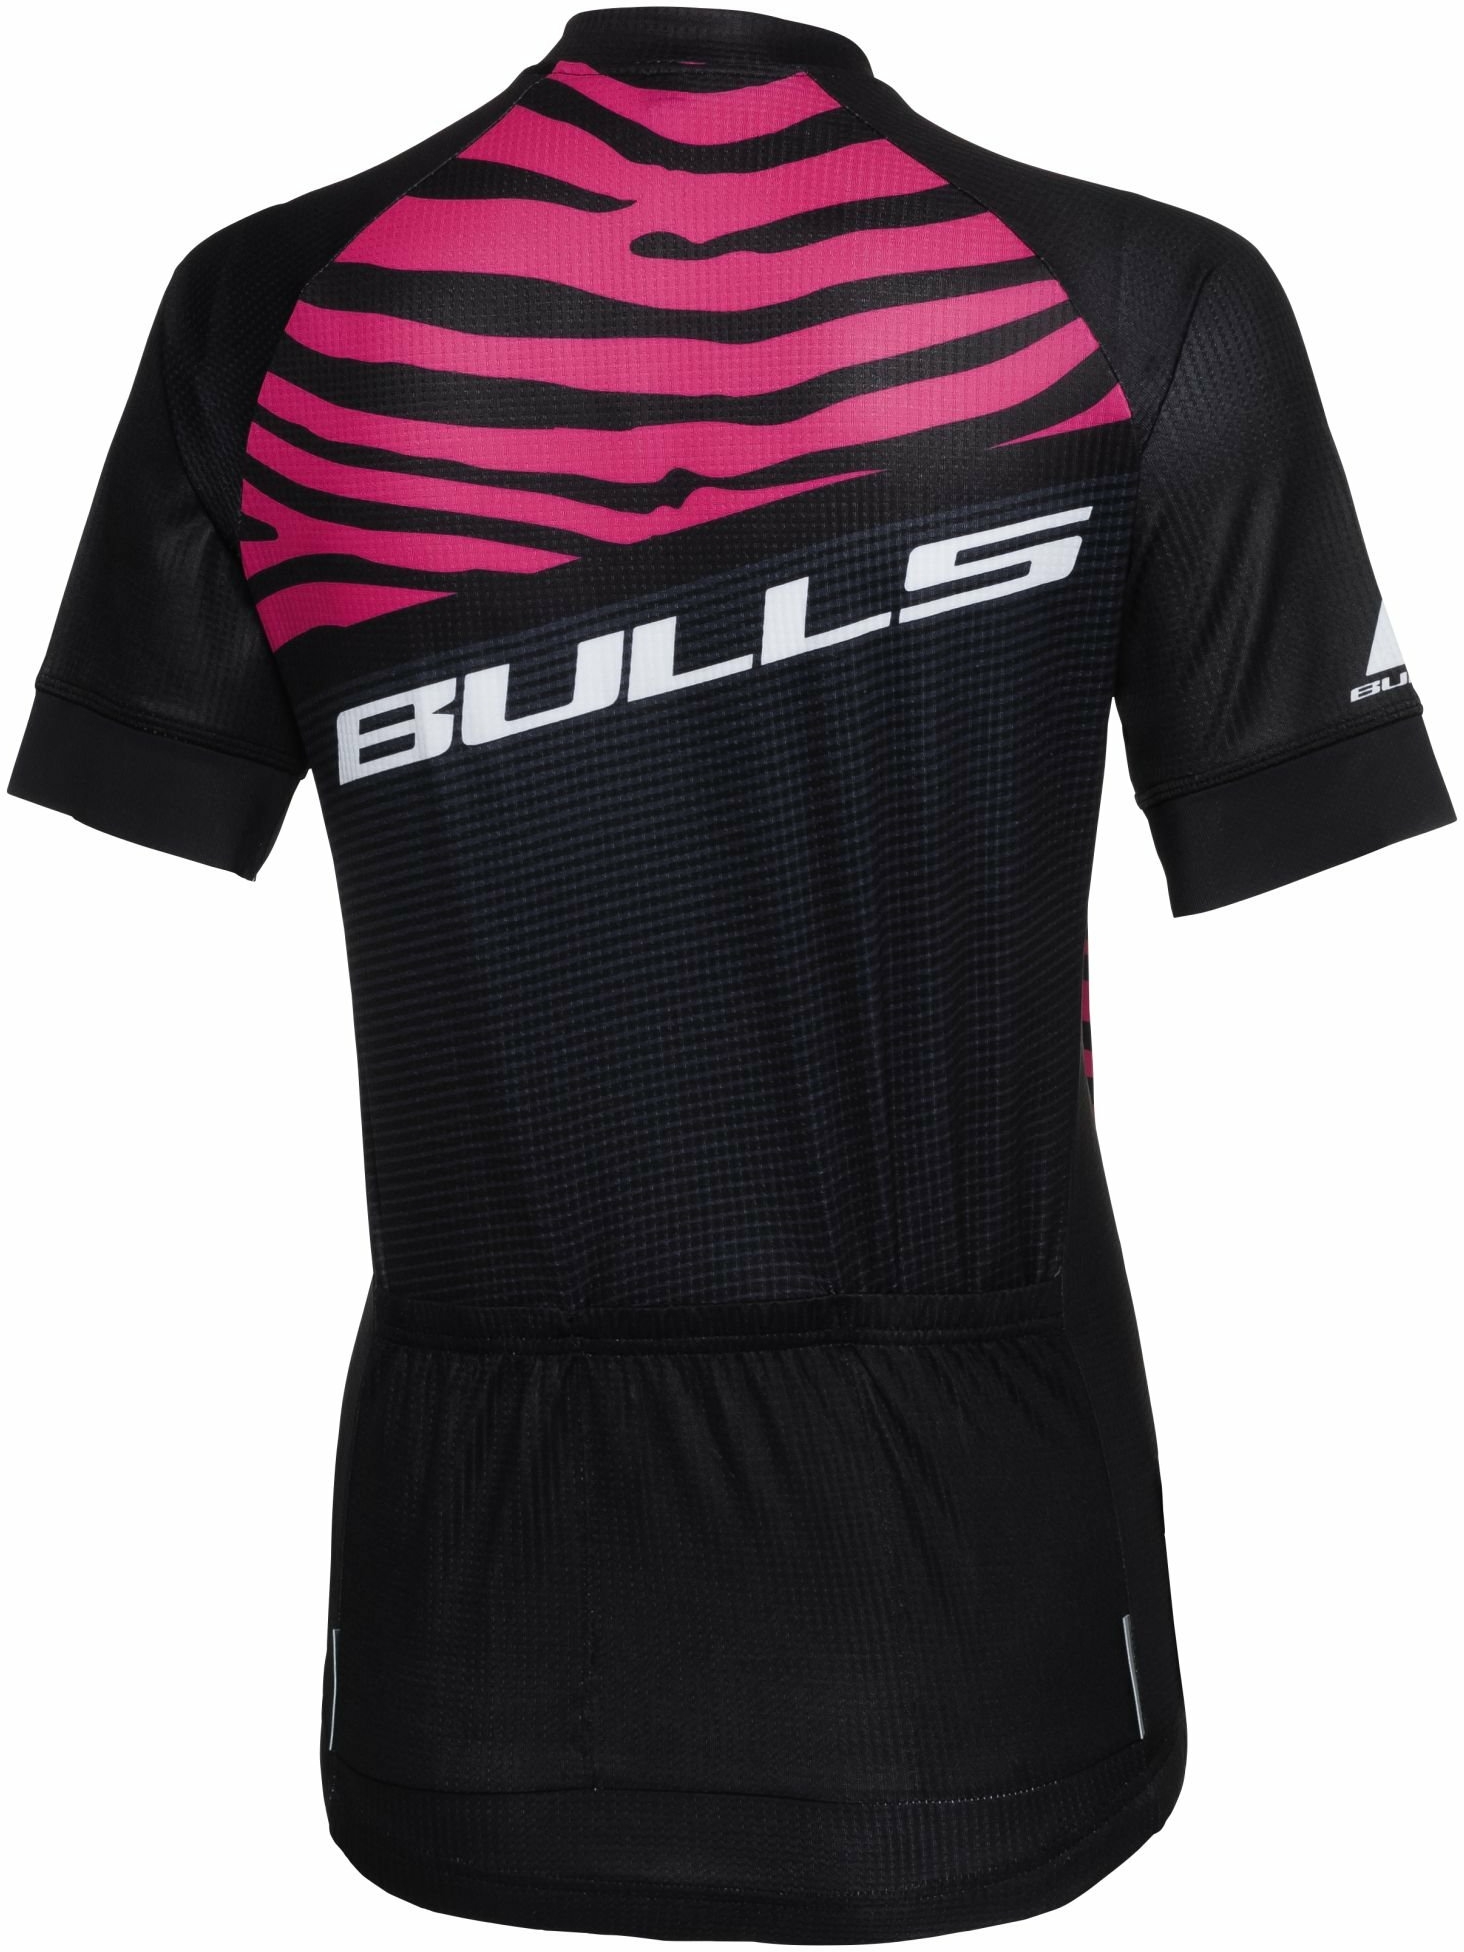 BULLS Damen Trikot Team Bulls Zebra Cape Epic